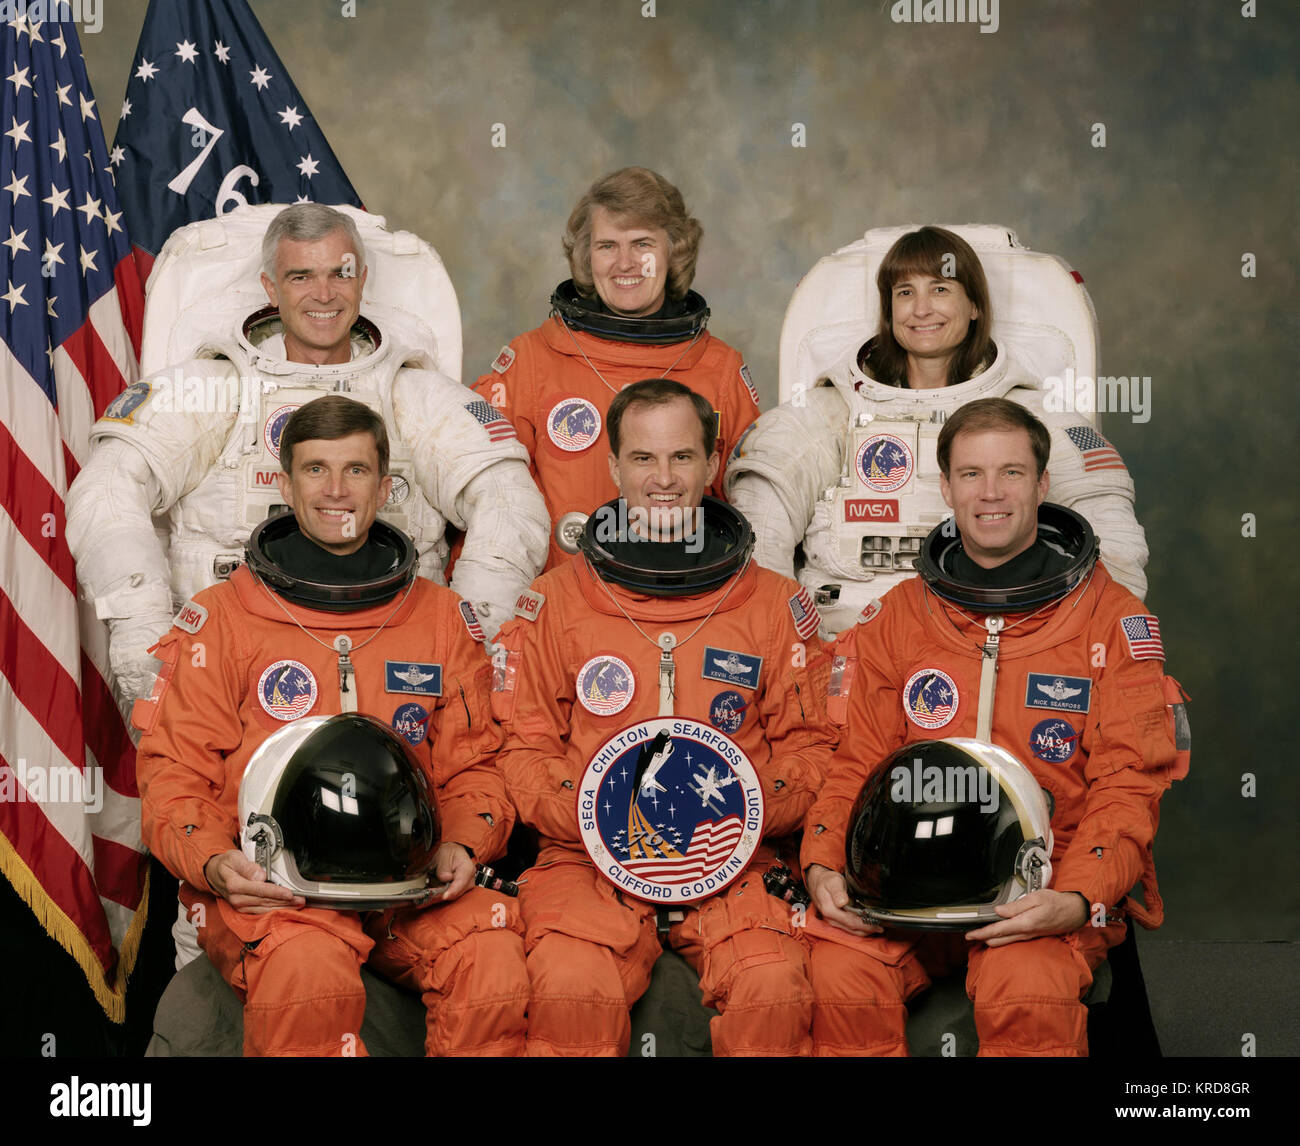 STS-76 CREW PORTRAIT: FRONT ROW L TO R: SEGA, RONALD; CHILTON, KEVIN; SEARFOSS, RICHARD; CLIFFORD, MICHAEL; LUCID, SHANNON; GODWIN, LINDA. STS-76 crew Stock Photo